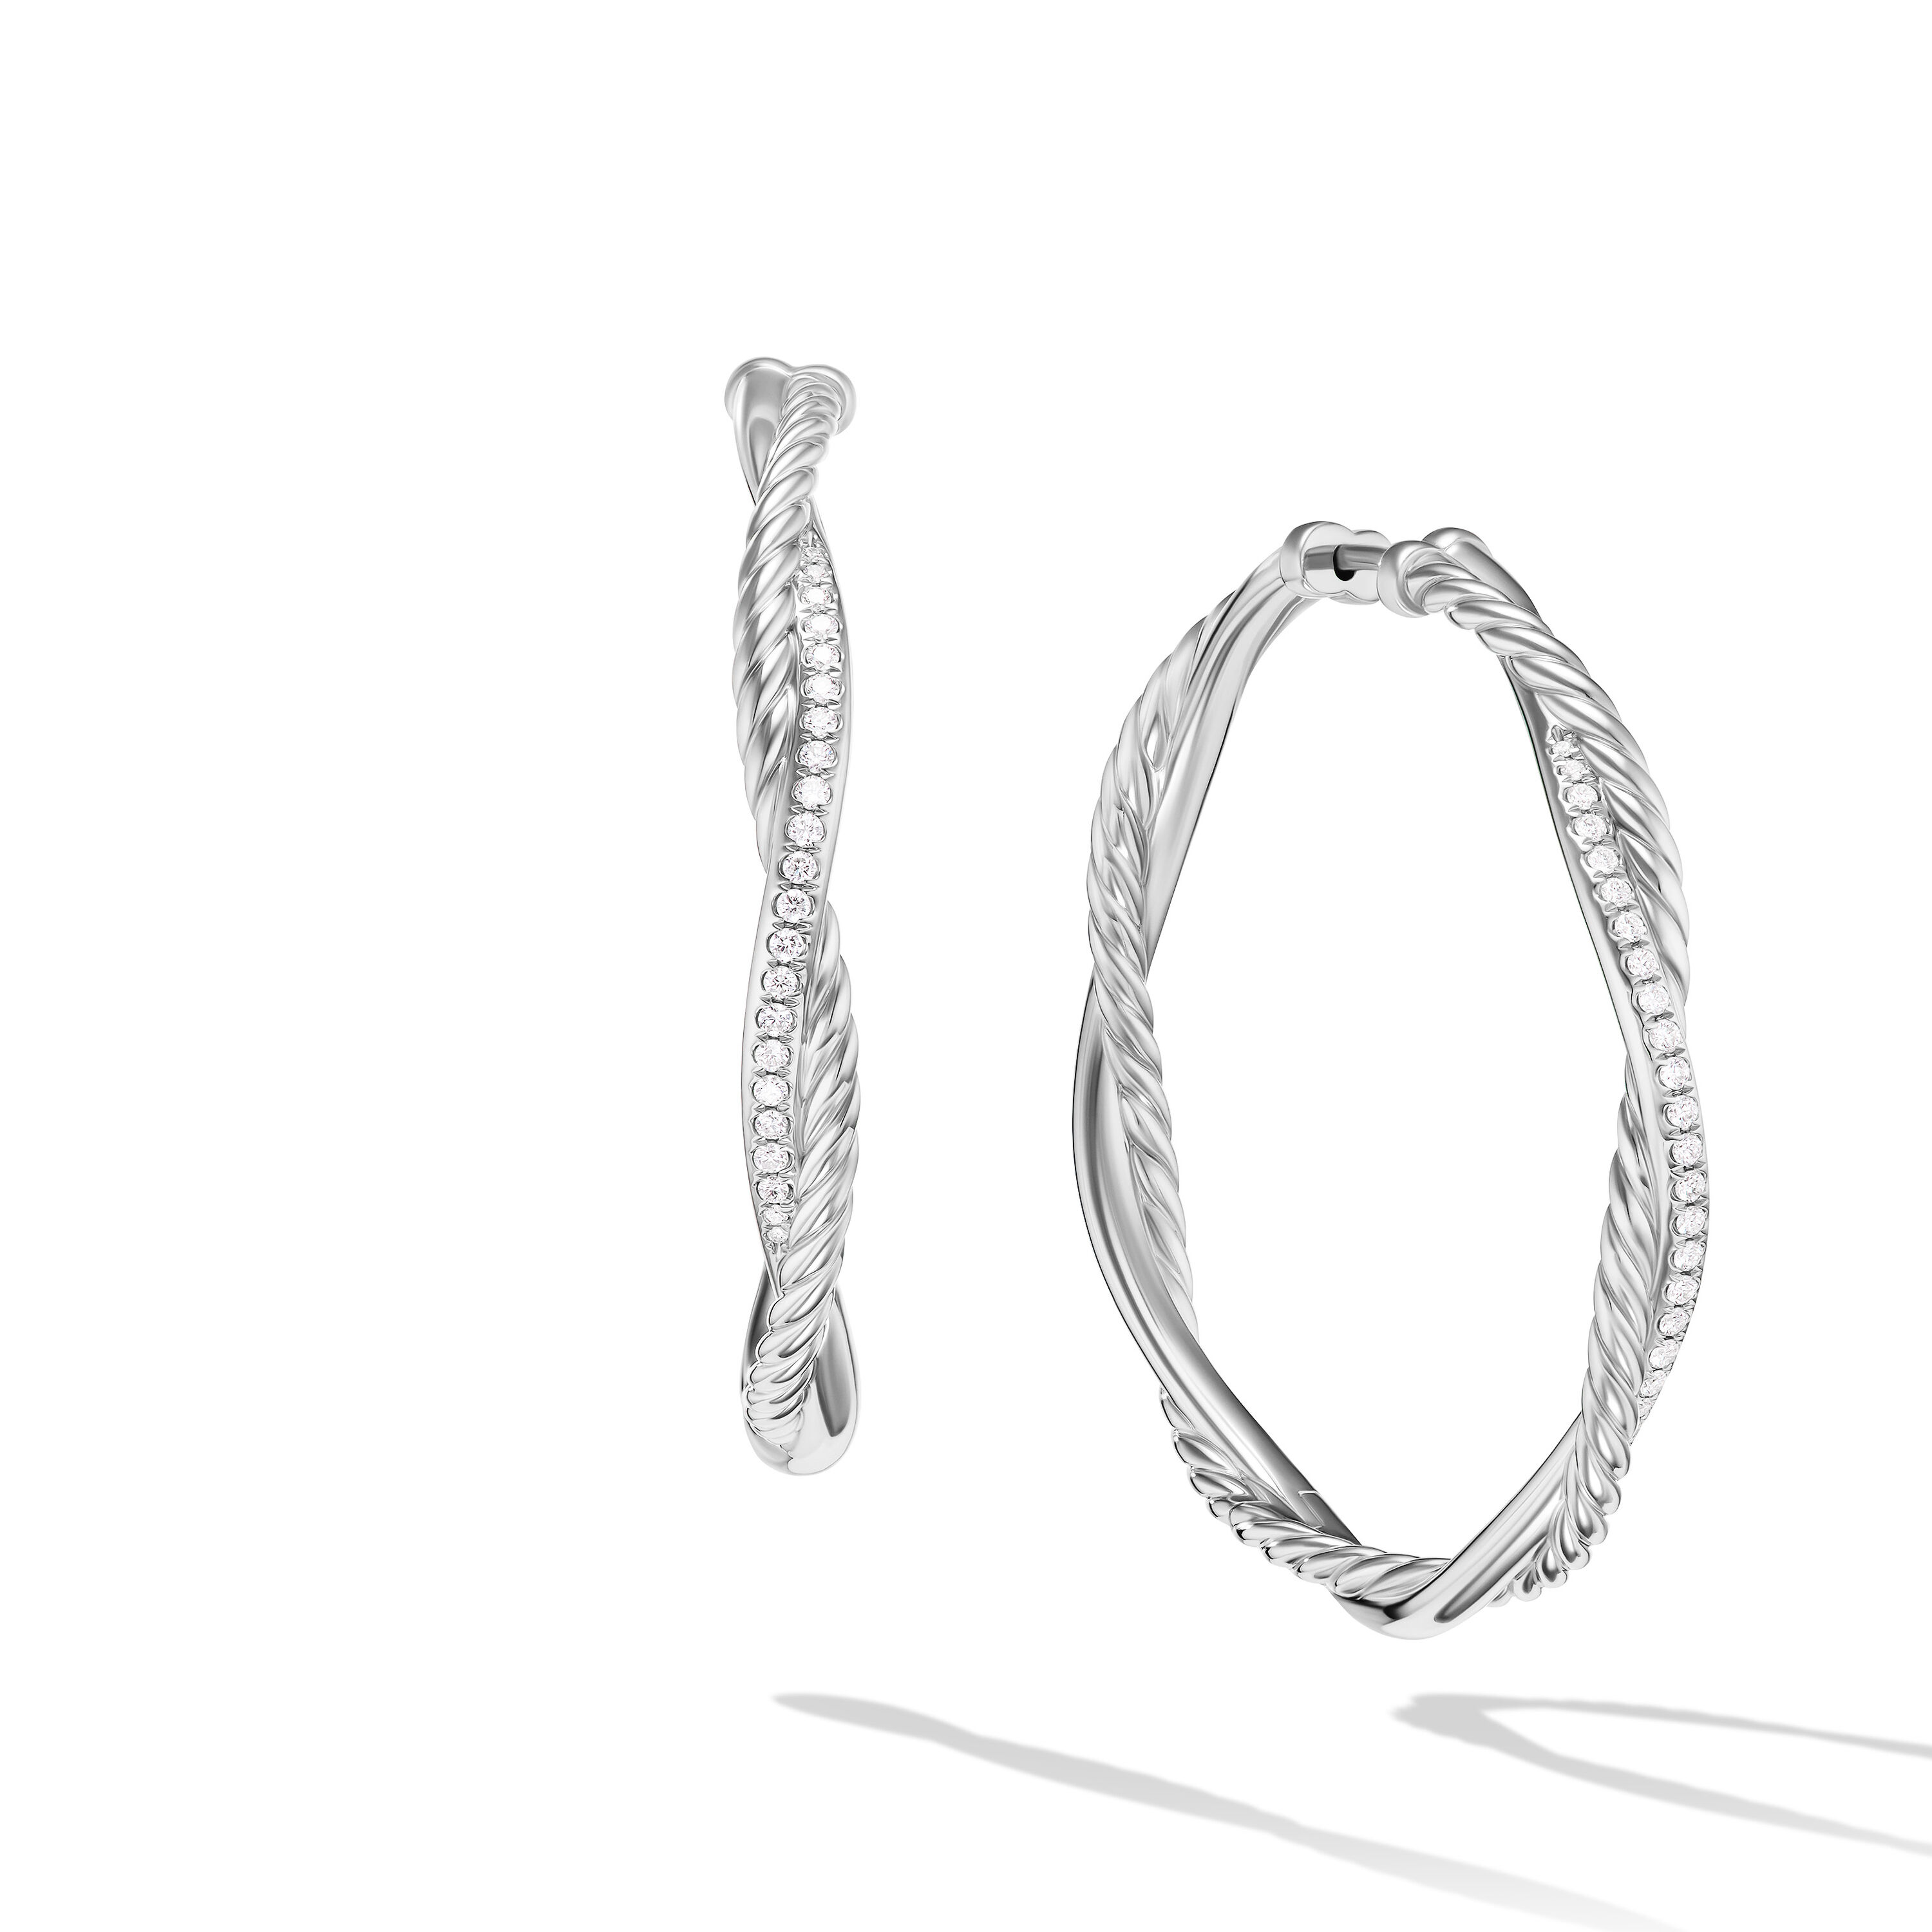 Infinity Hoop Earrings in Sterling Silver with Diamonds, 42mm